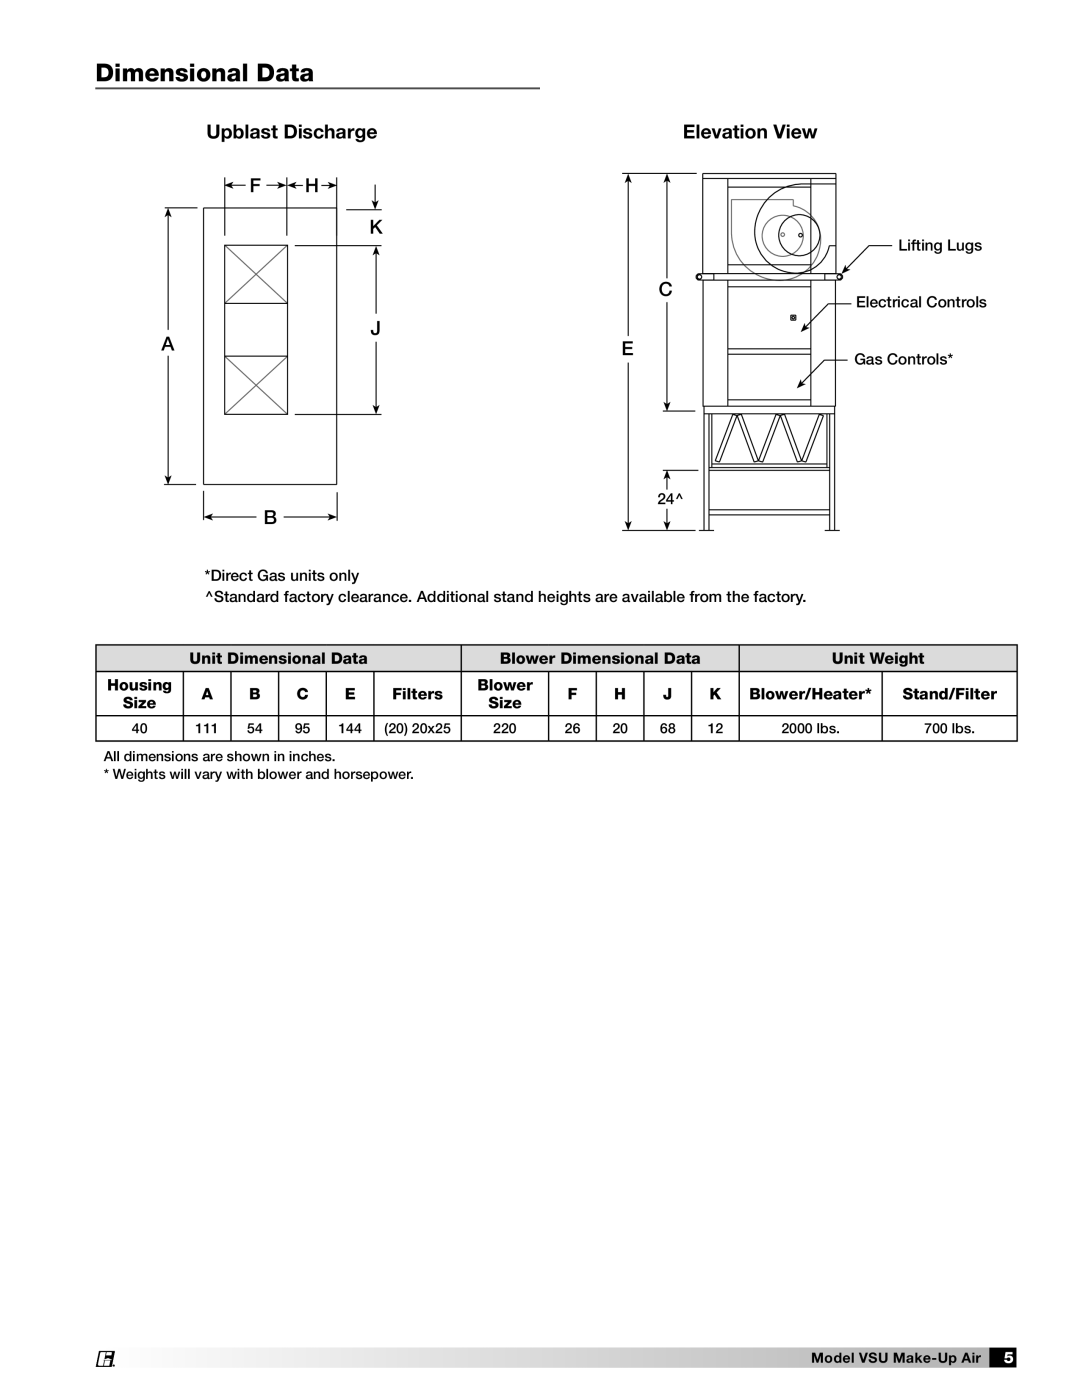 Greenheck Fan VSU manual Dimensional Data, Upblast Discharge, Elevation View, F H K C 